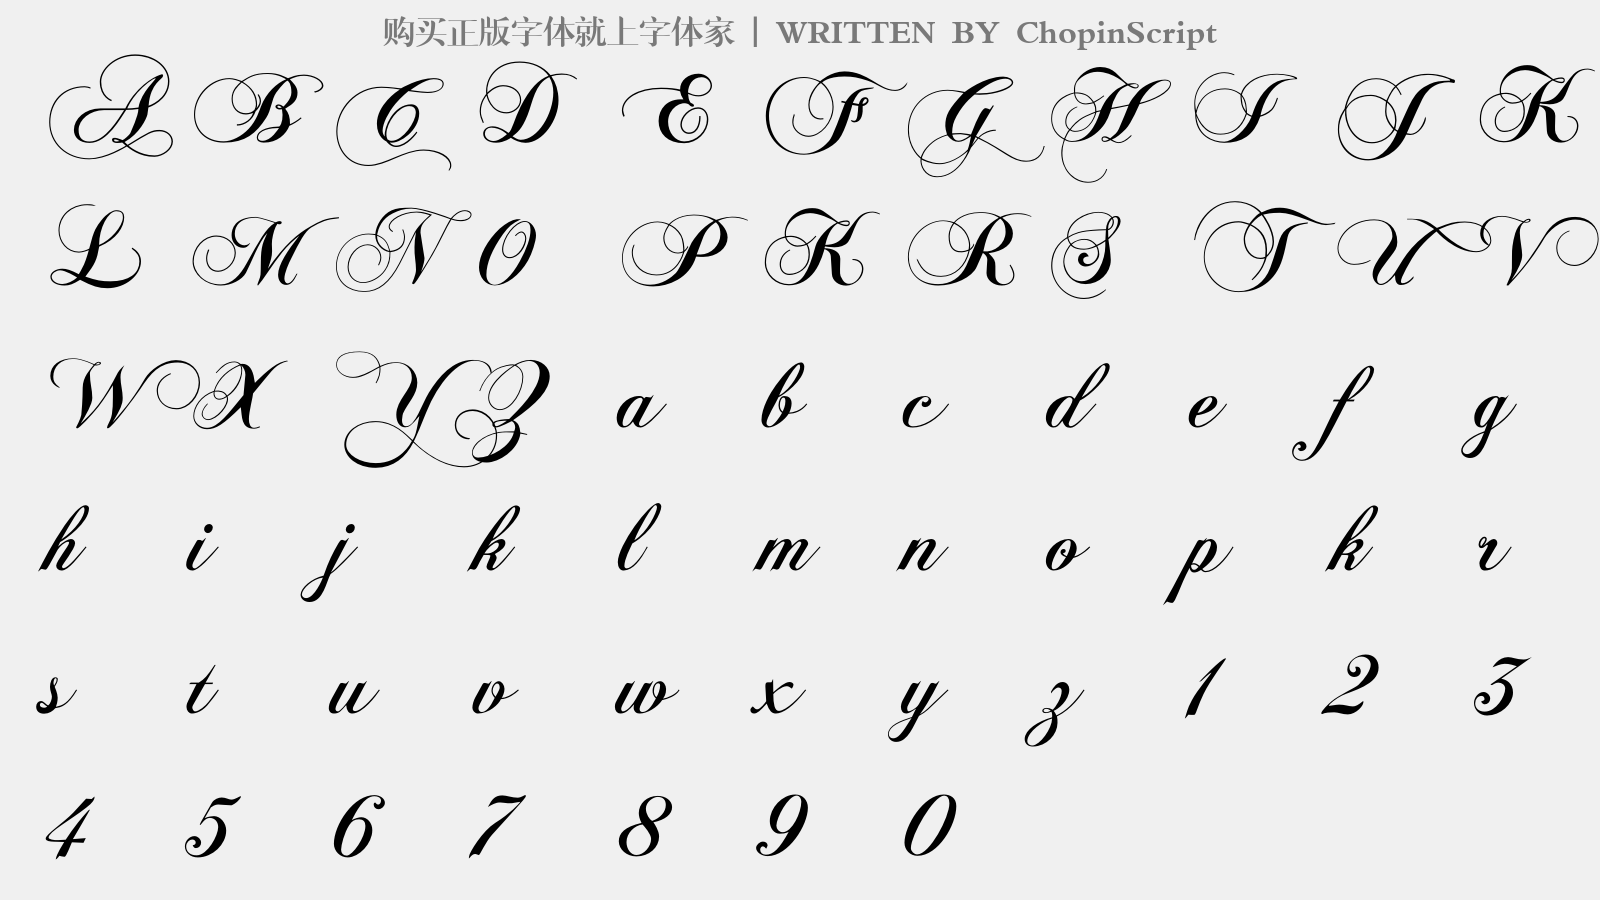 chopinscript免费字体下载 - 英文字体免费下载尽在字体家